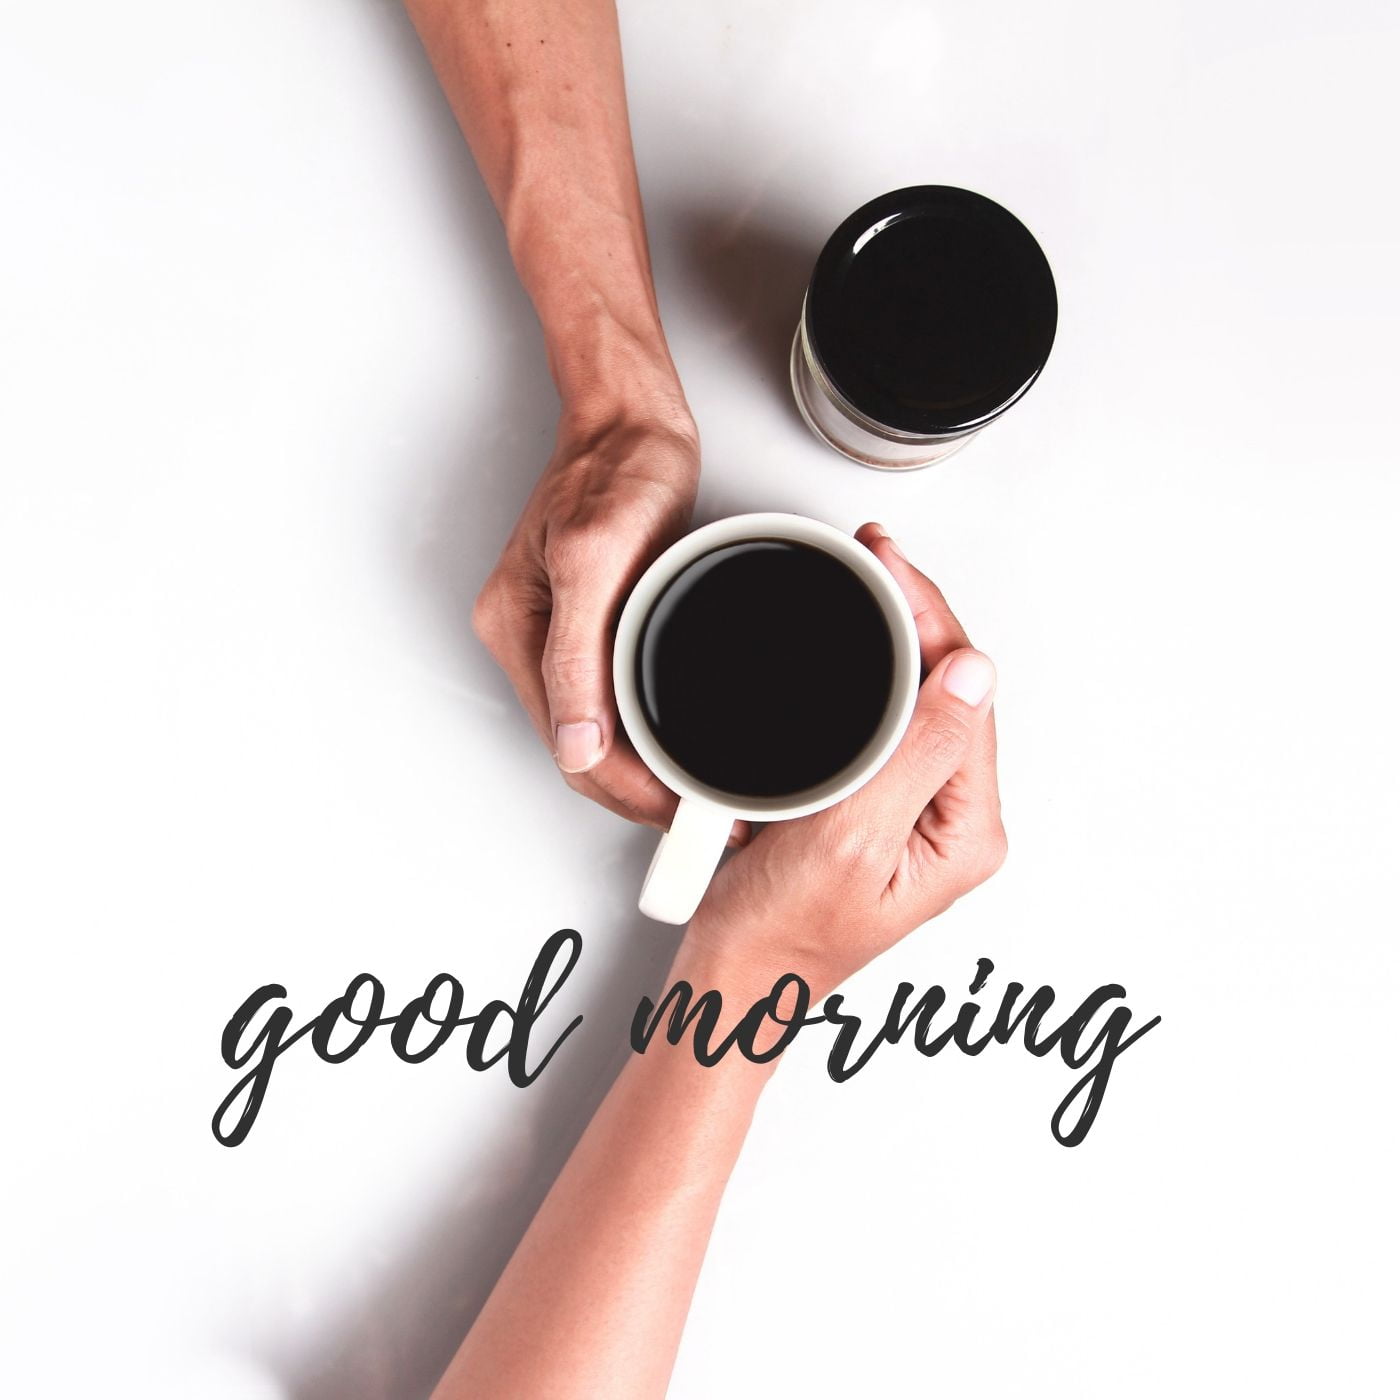 Good Morning Black Coffee Image